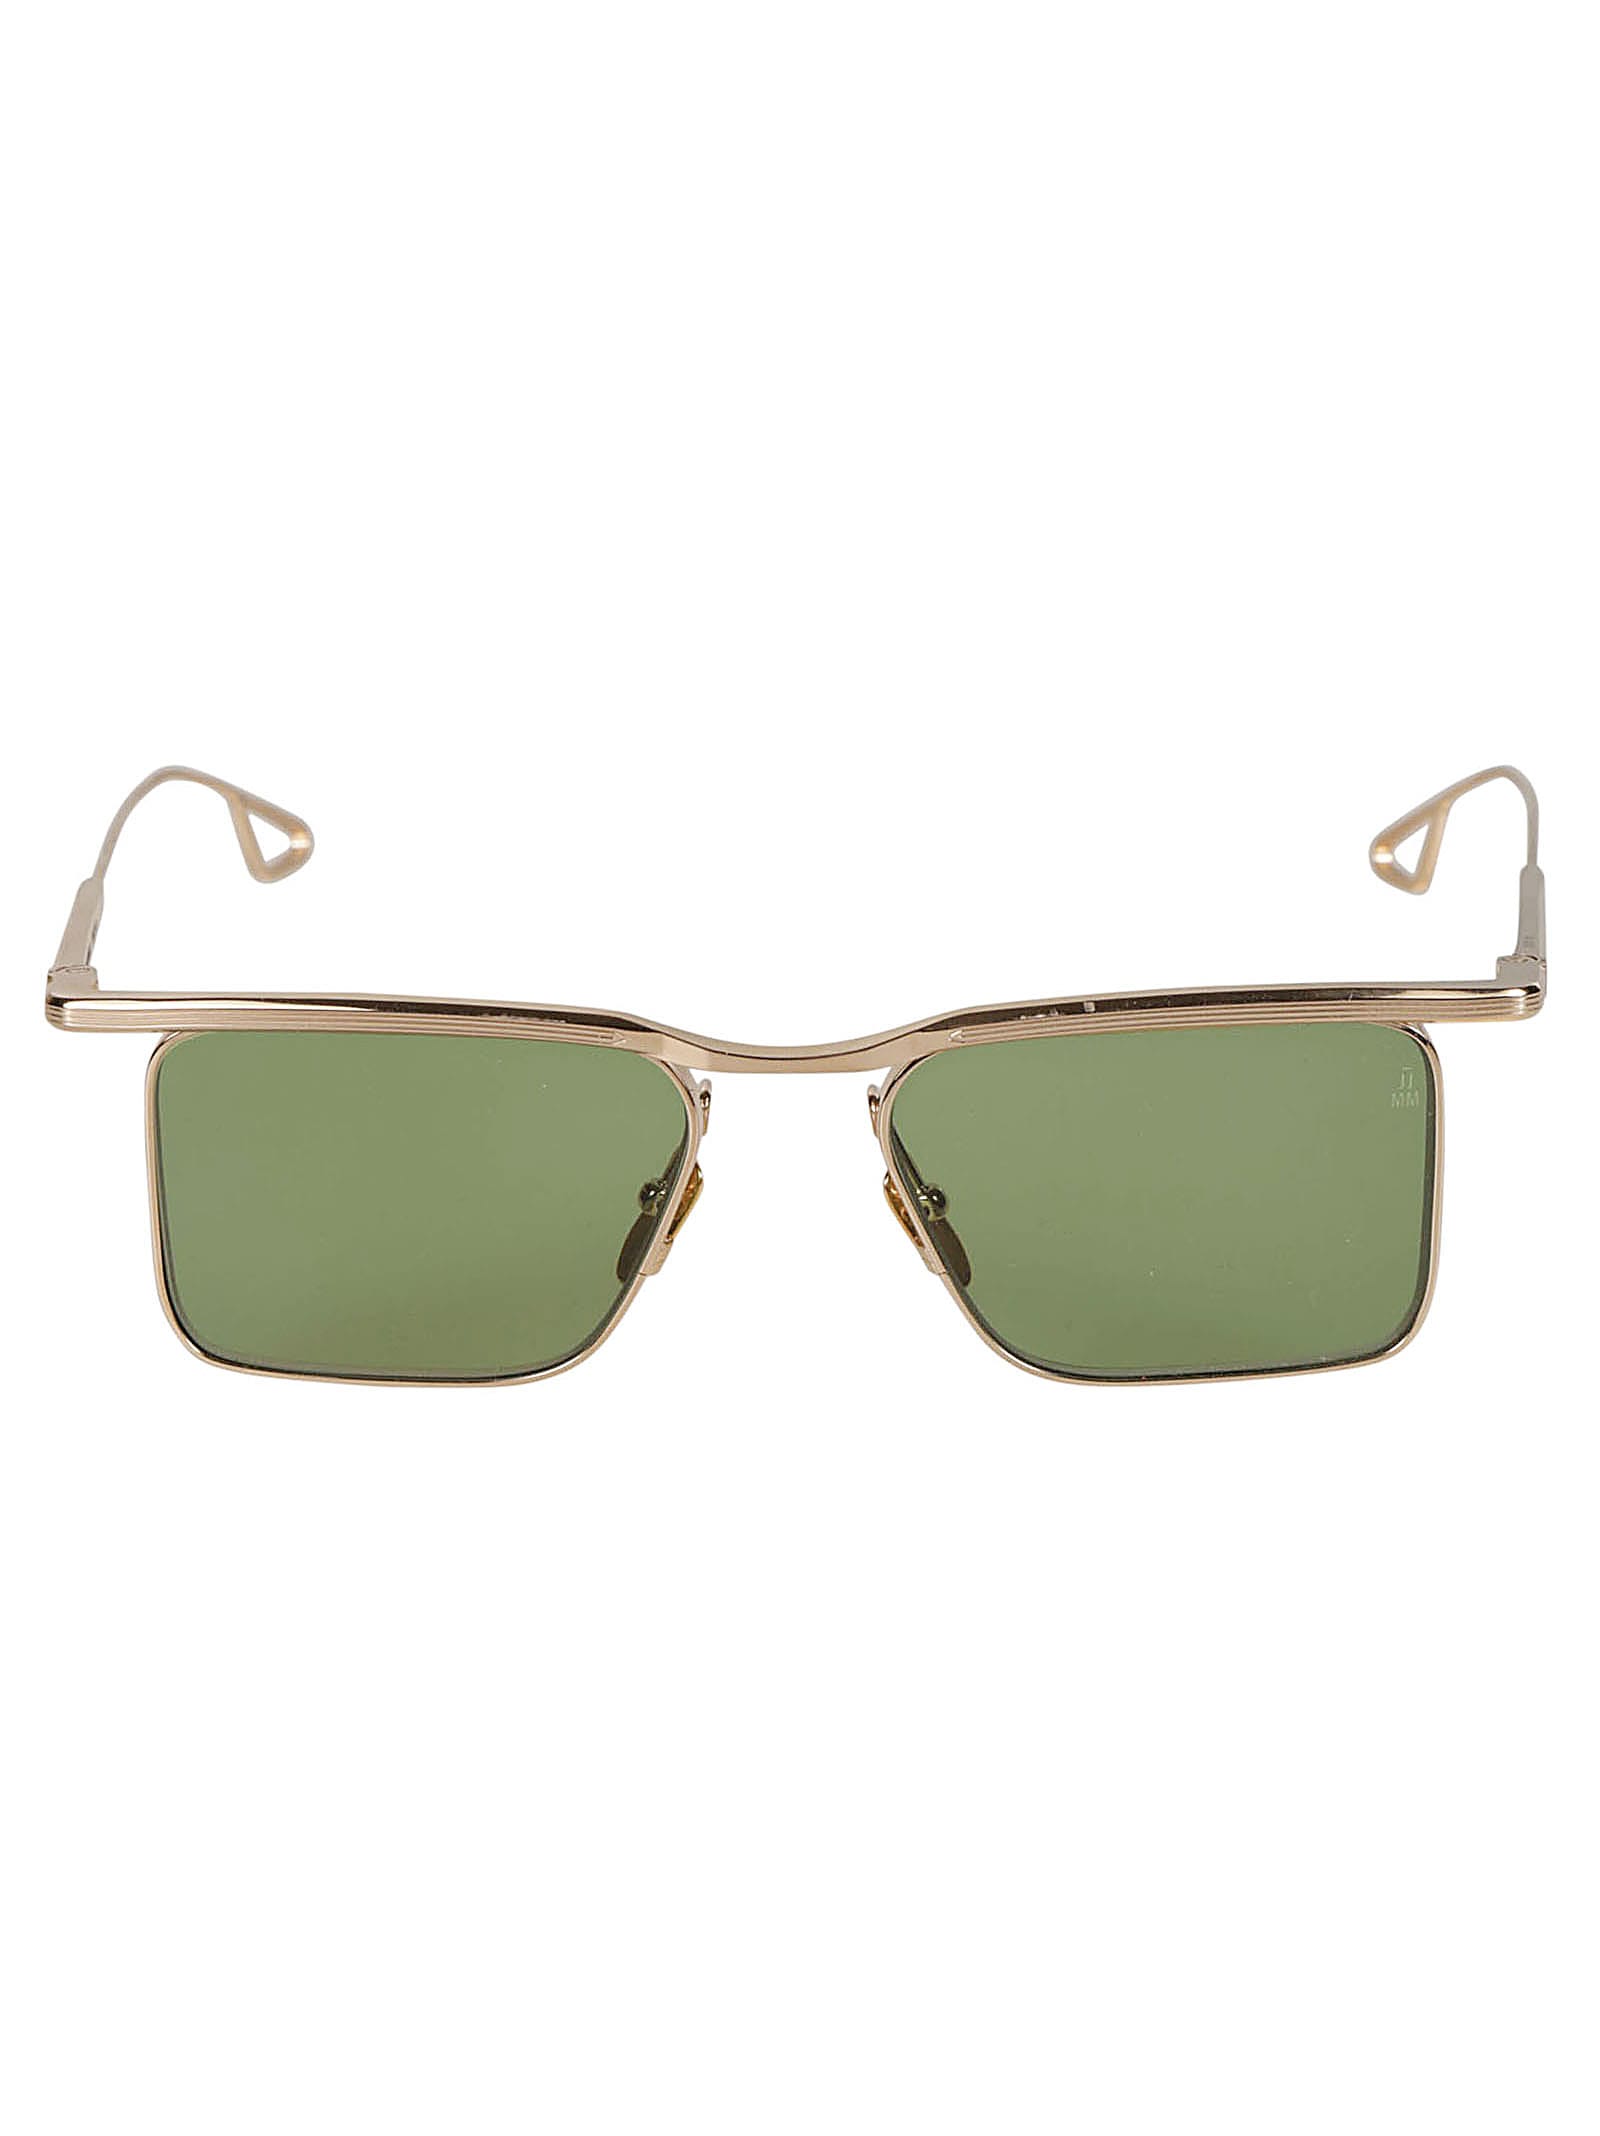 Jacques Marie Mage Beauregard Sunglasses Sunglasses In Gold